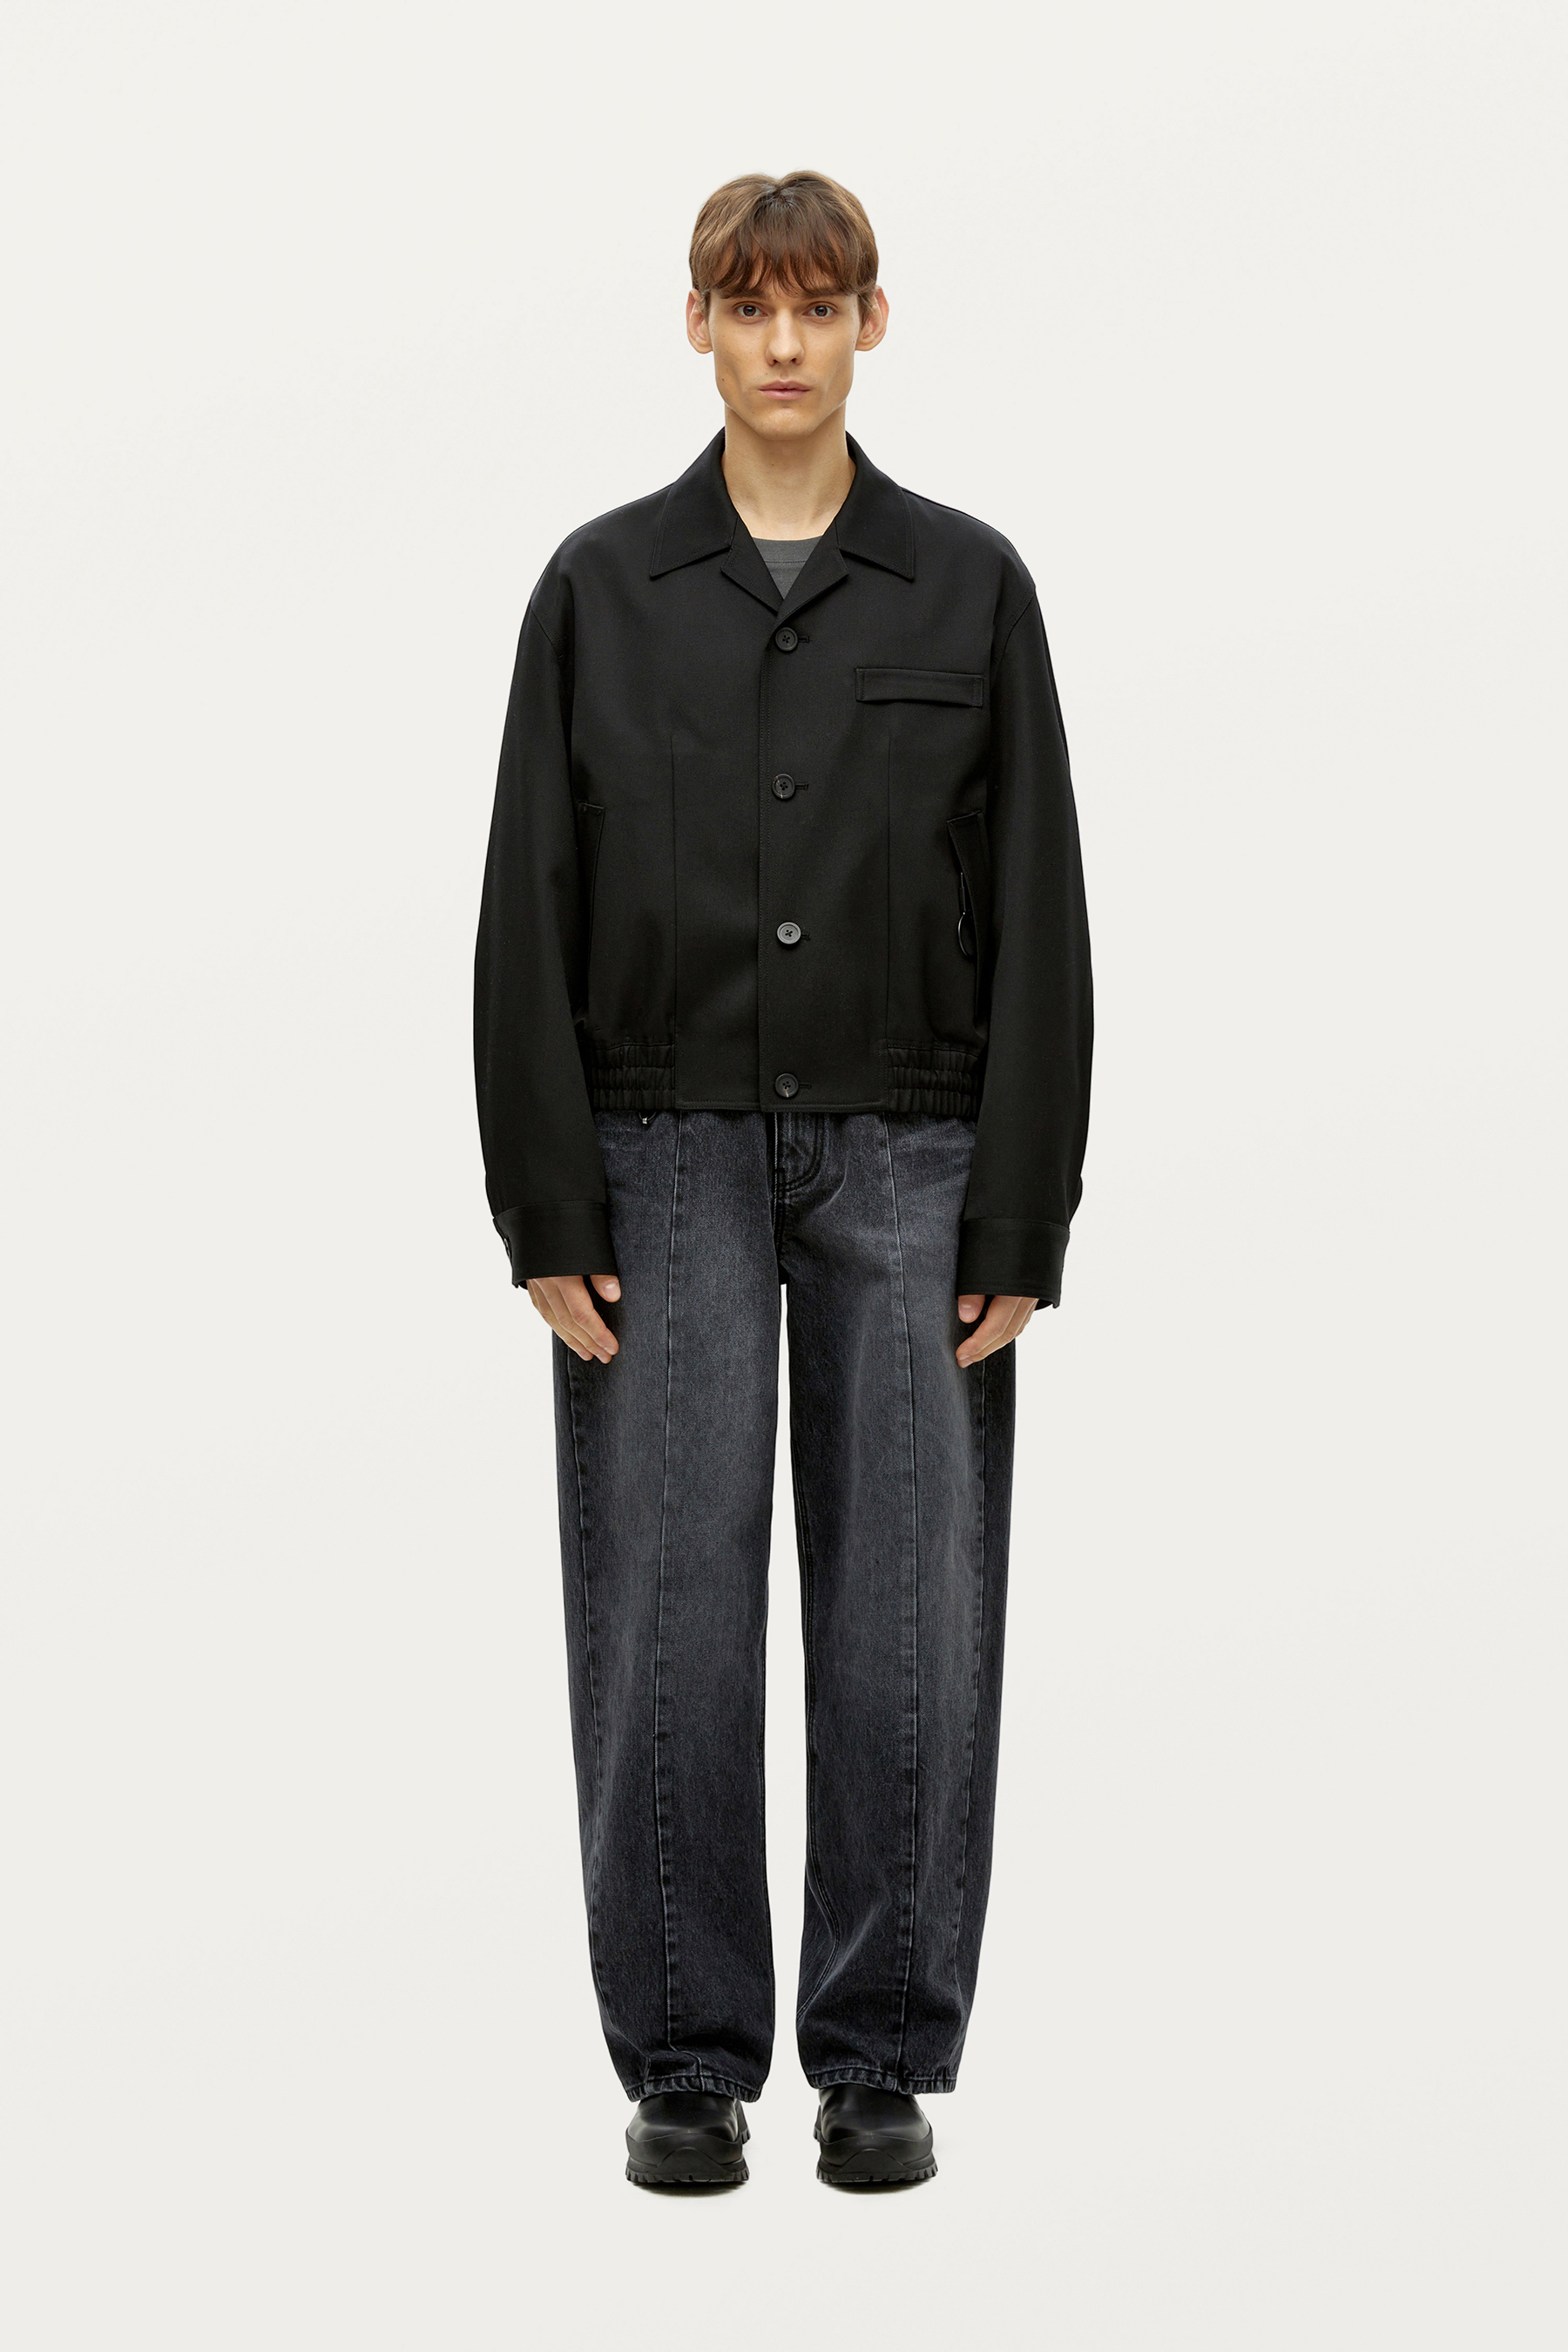 Black Open Collar Blouson Shirt Jacket - SOLIDHOMME.COM | Solid Homme  Official Online Store